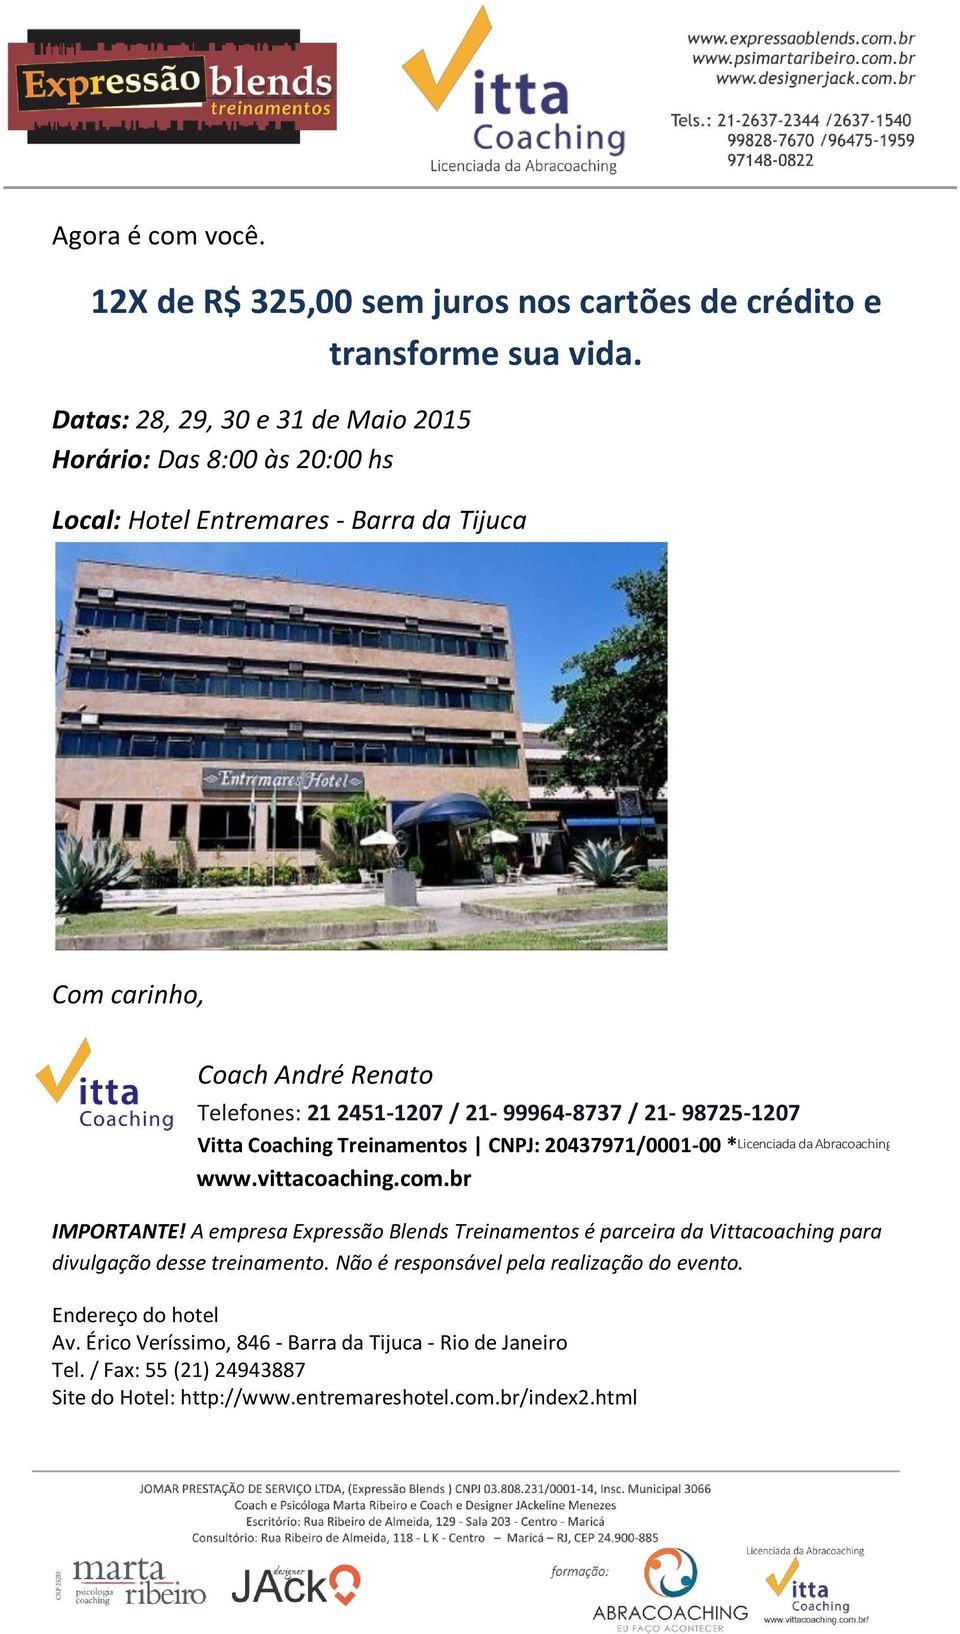 / 21-98725-1207 Vitta Coaching Treinamentos CNPJ: 20437971/0001-00 * Licenciada da Abracoaching www.vittacoaching.com.br IMPORTANTE!